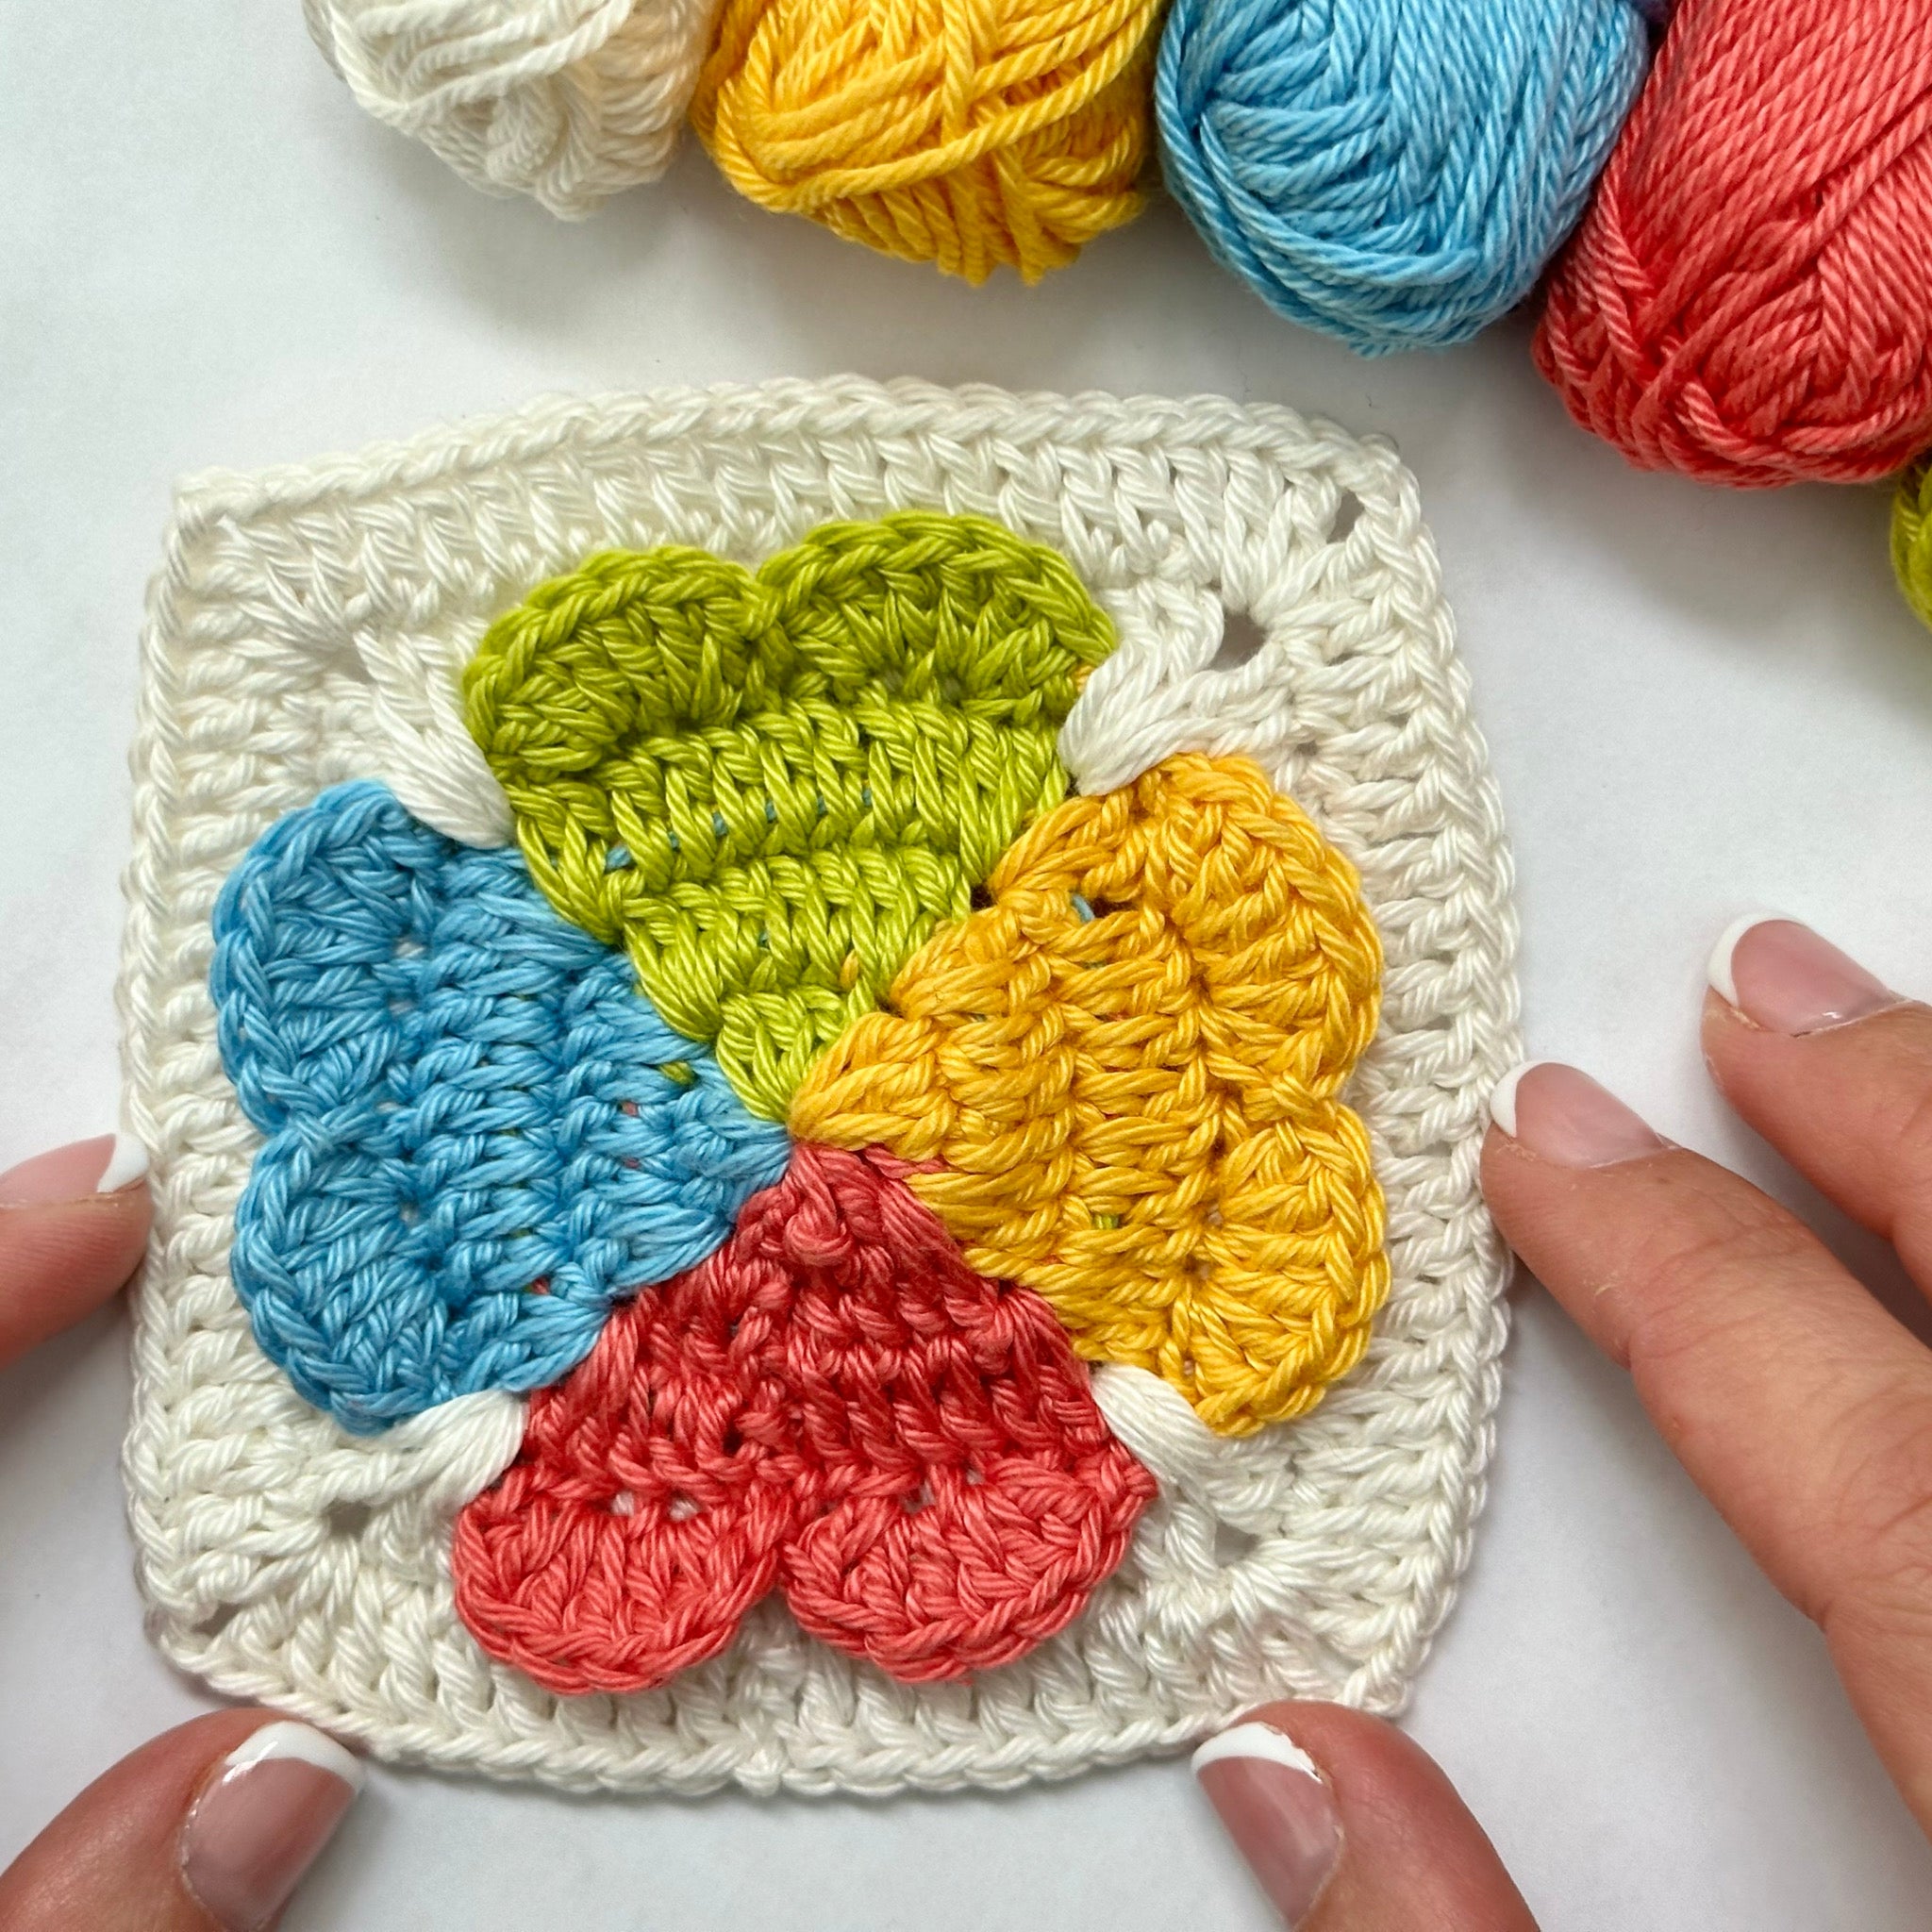 Four Hearts Granny Square Crochet PDF PATTERN (instant download)